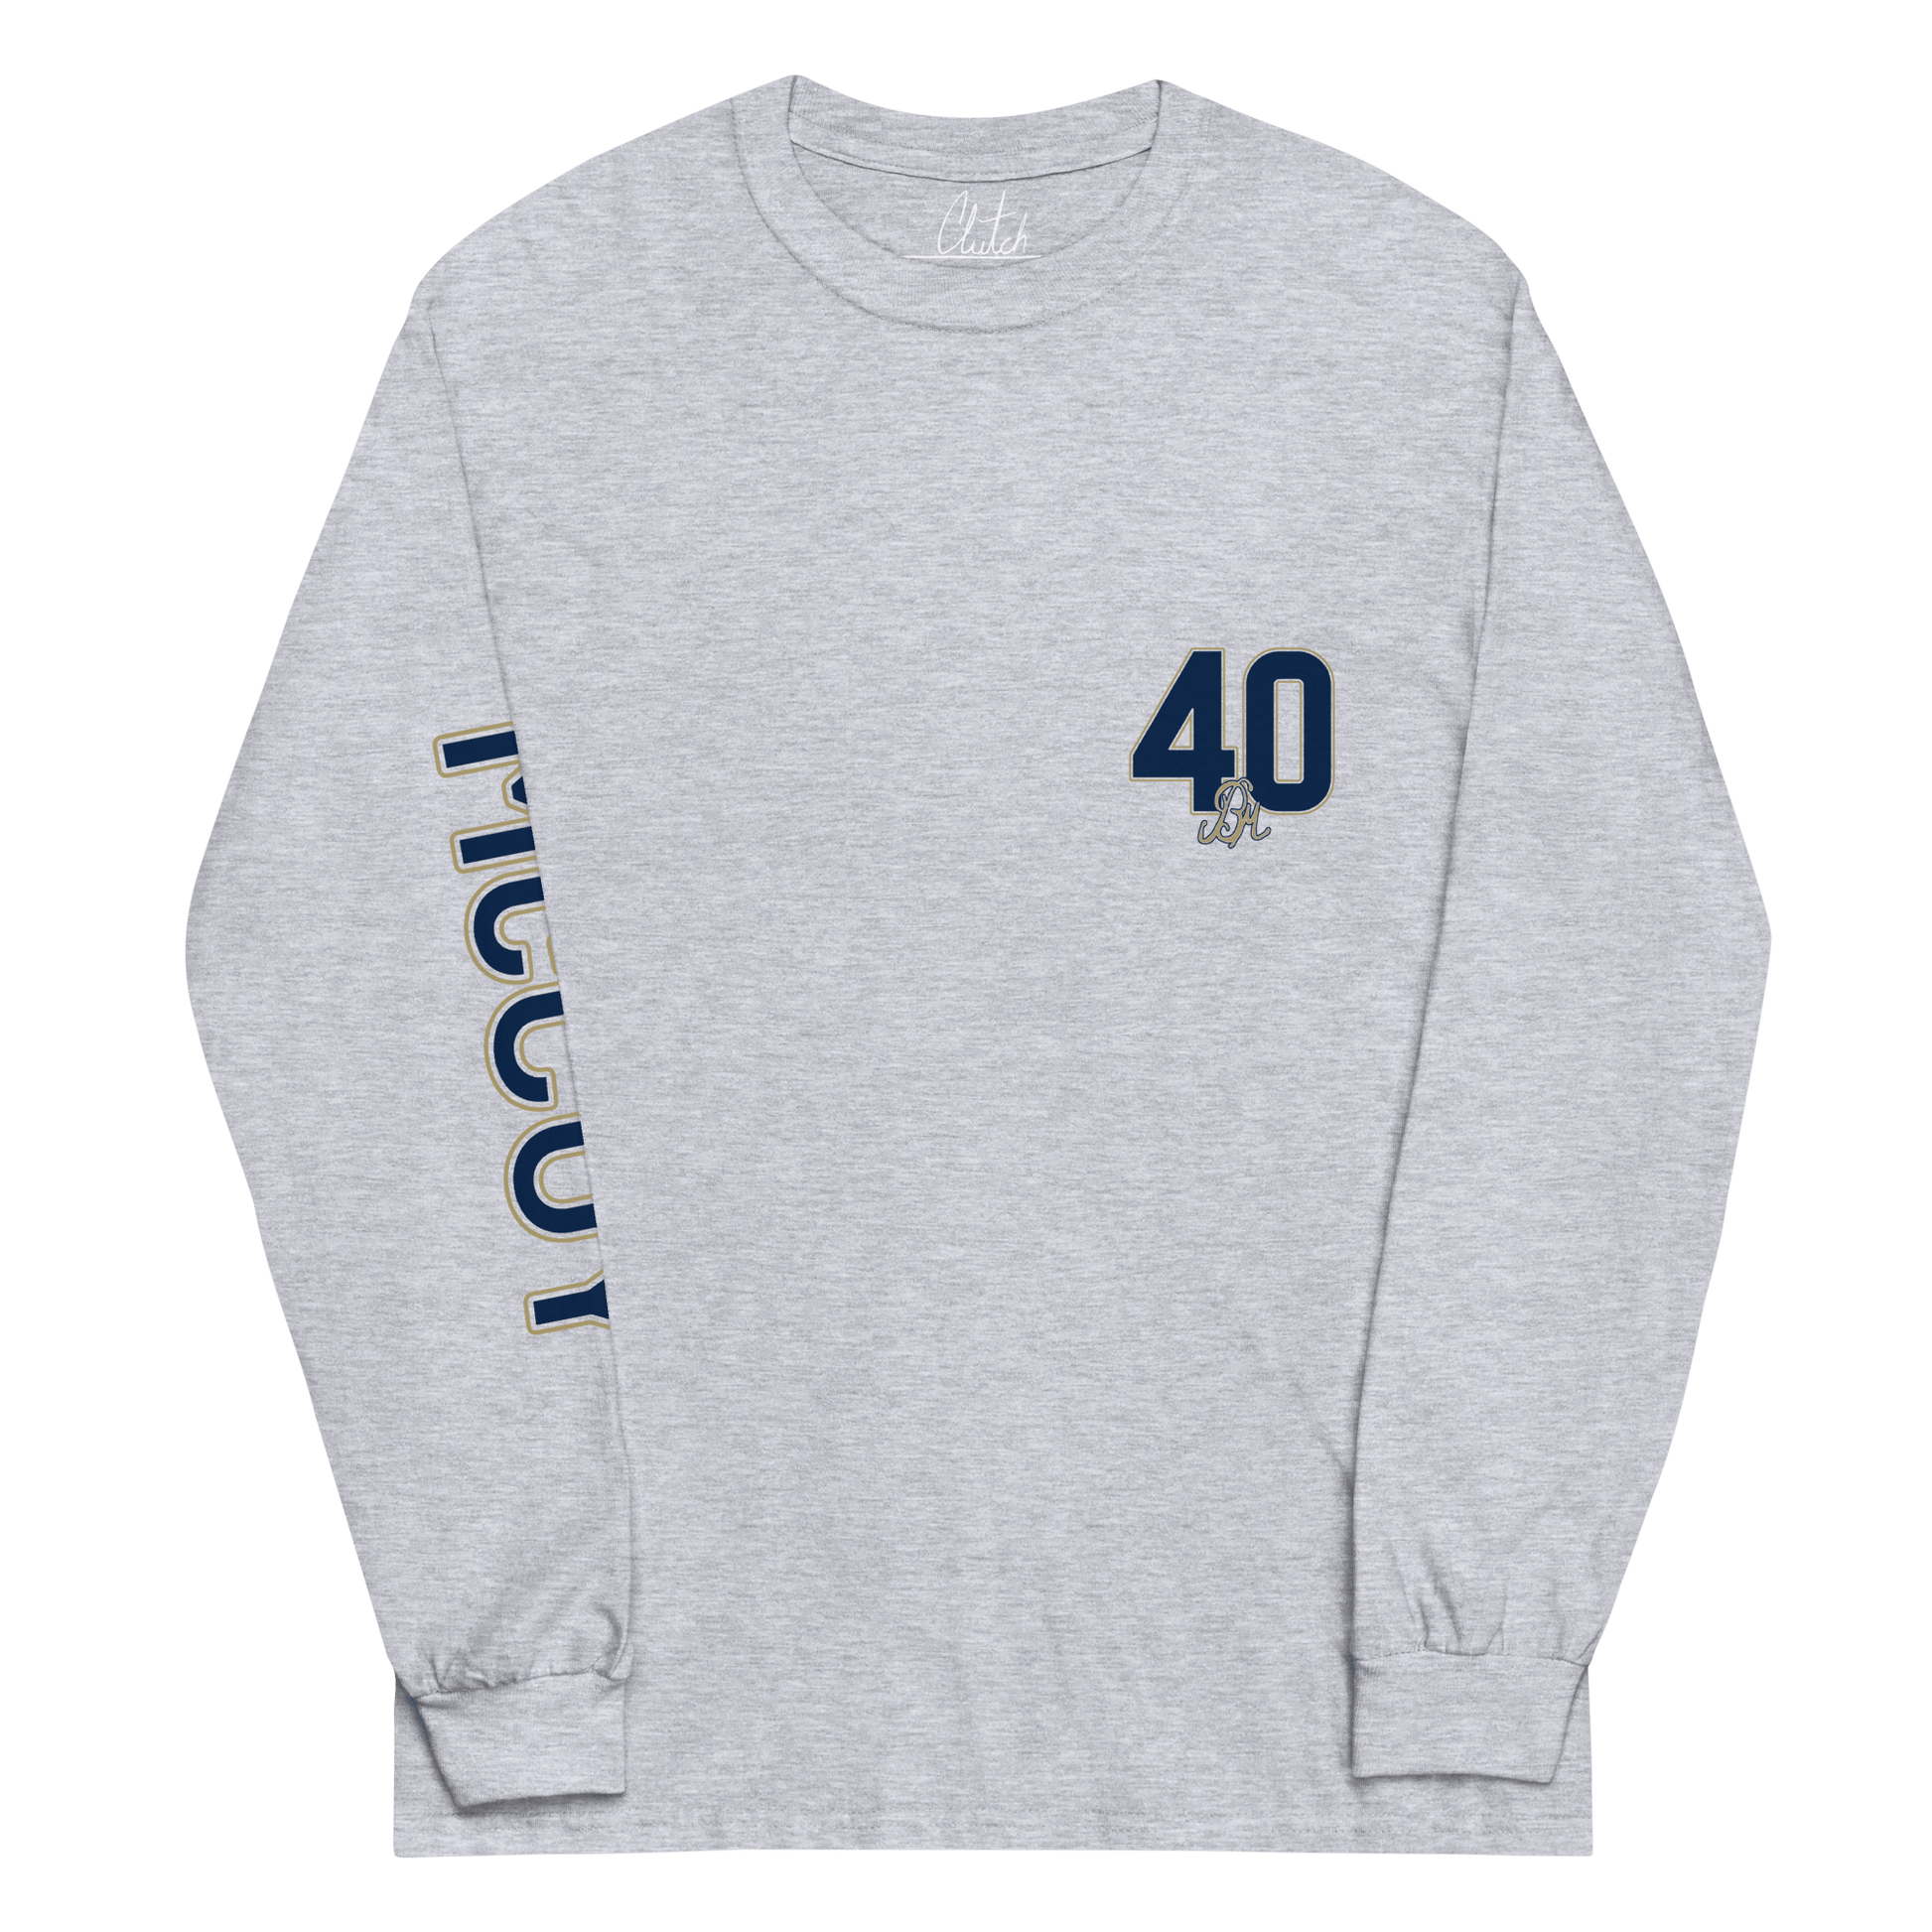 Bryan McCoy | Long Sleeve Shirt - Clutch -